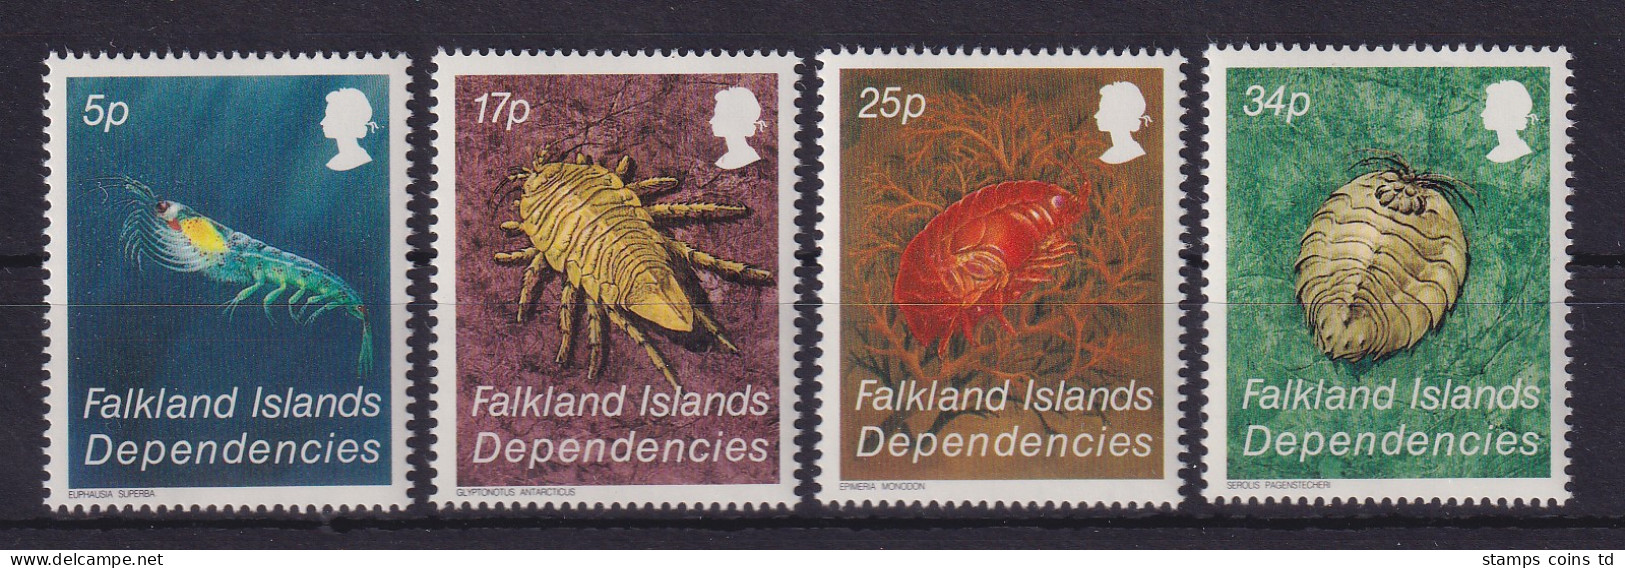 Falkland-Inseln Dependencies 1984 Krebstiere Mi.-Nr. 121-124 Postfrisch ** - South Georgia